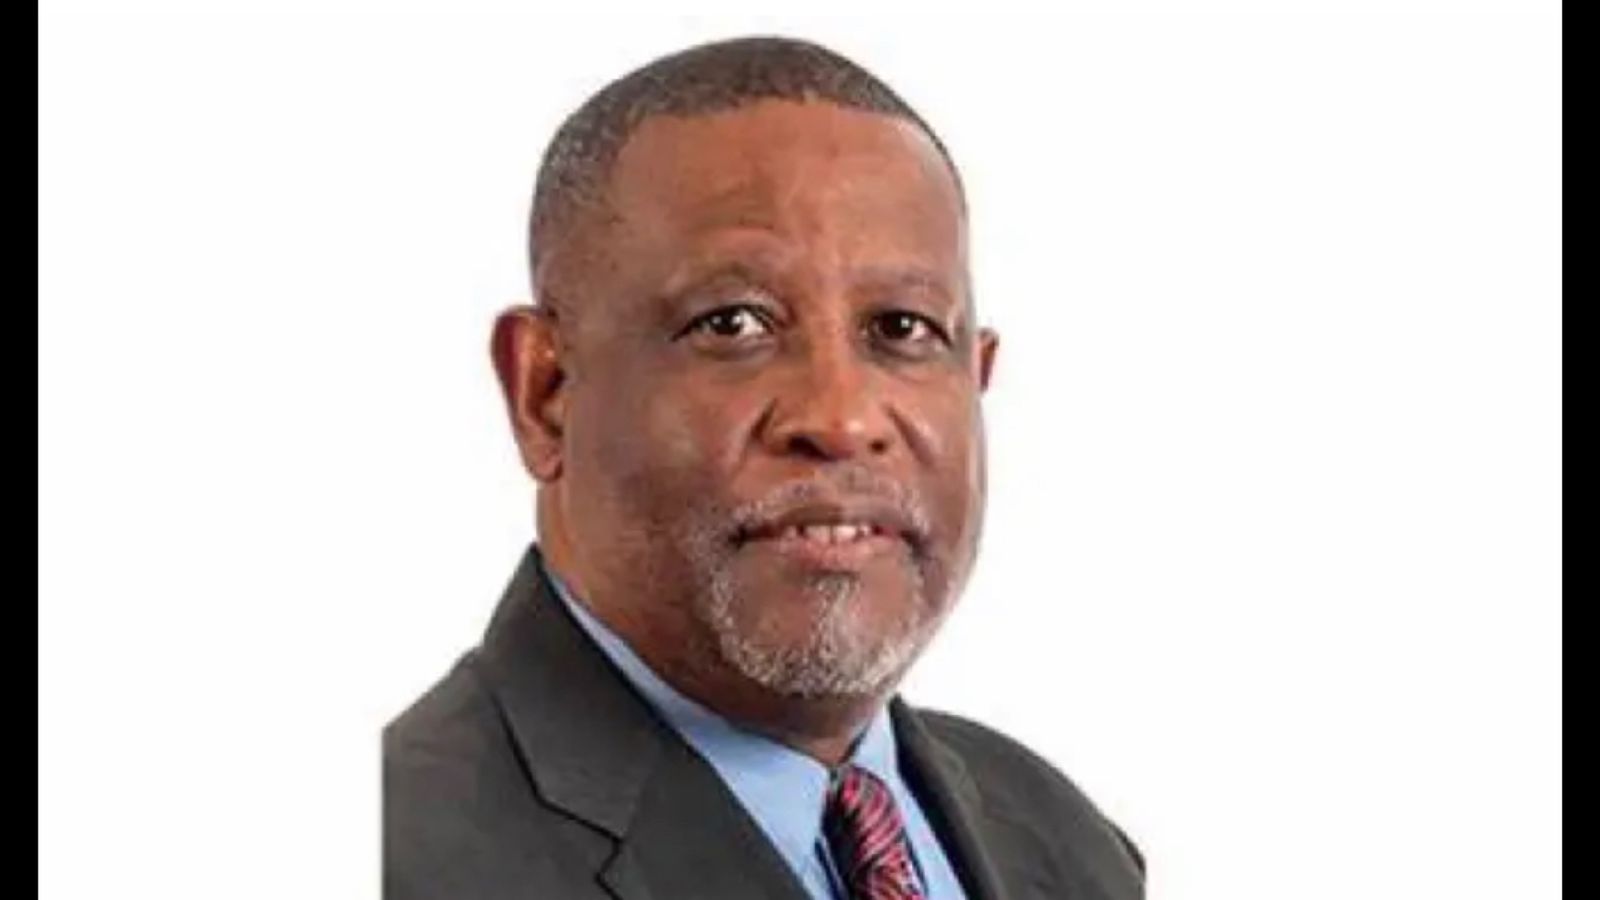 Bermuda: Senator resigns after controversial remarks targeting youth | Loop Caribbean News - Loop Caribbean News